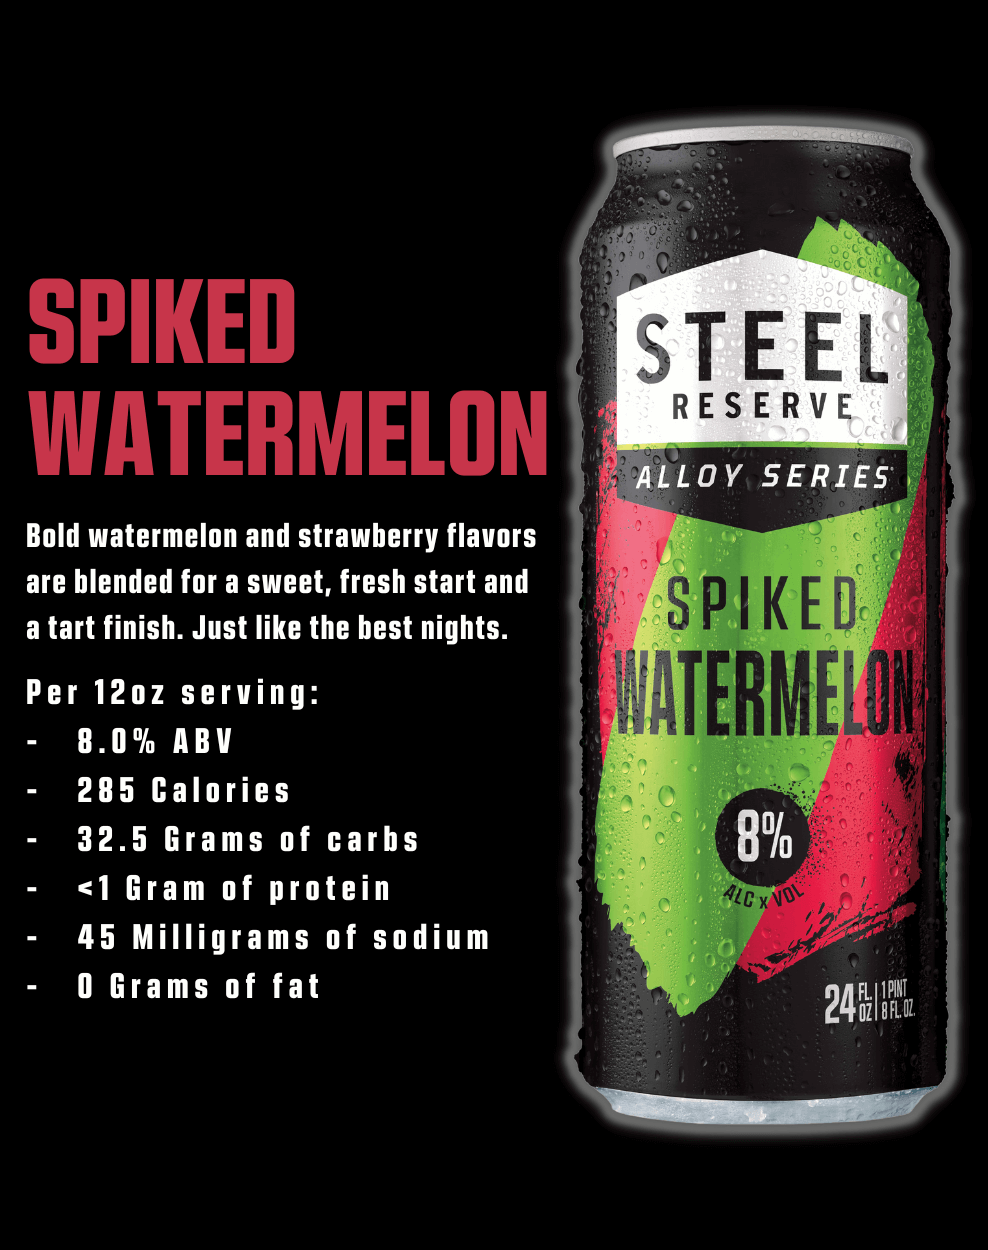 Spiked Watermelon description